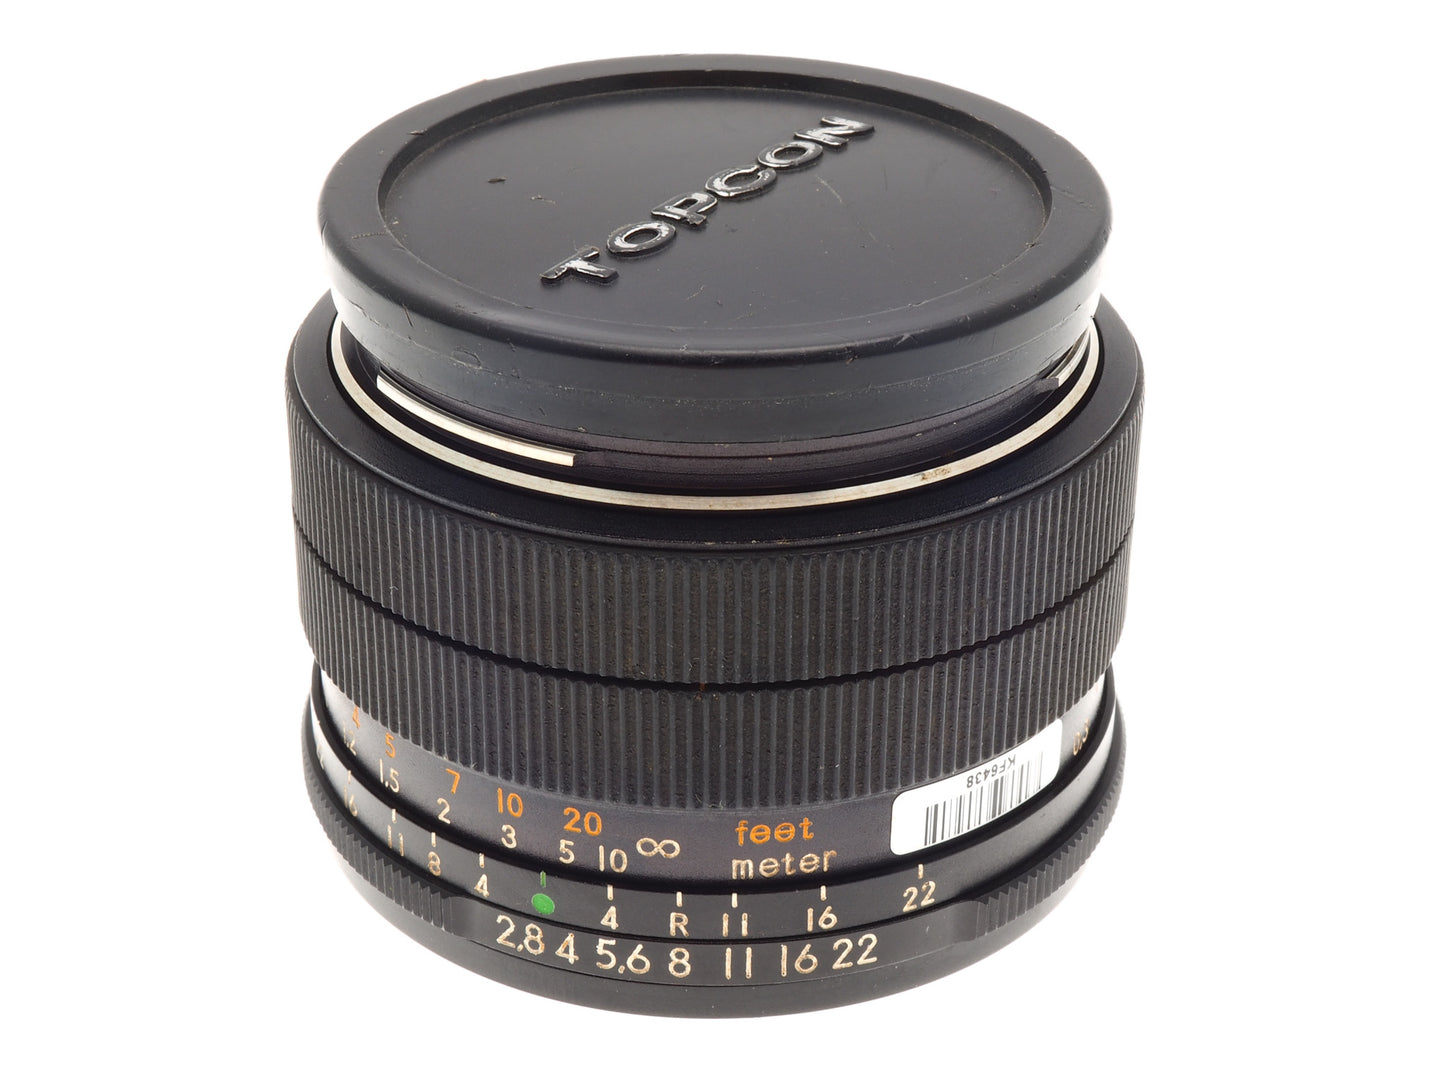 Topcon 28mm f2.8 RE Auto Topcor - Lens